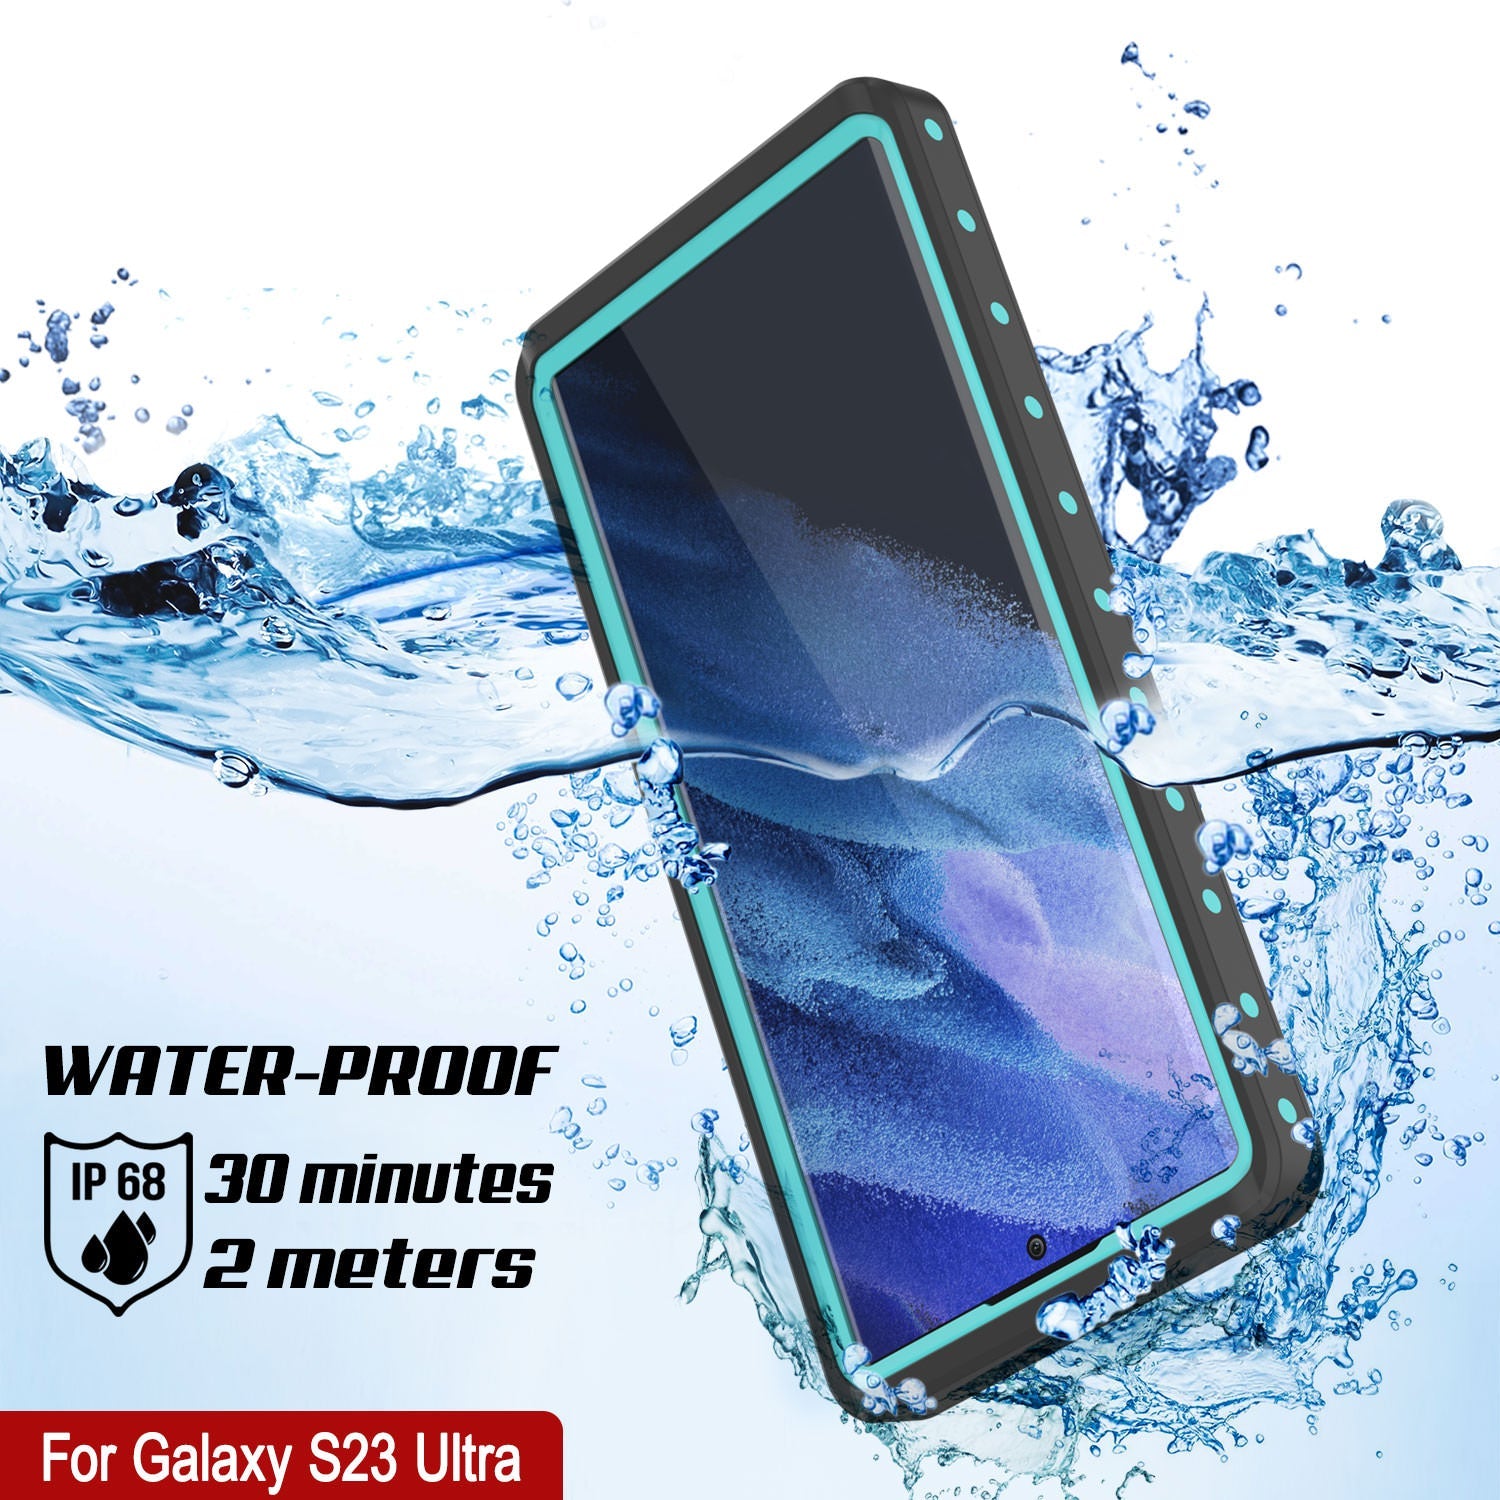 Galaxy S23 Ultra Waterproof Case PunkCase StudStar Teal Thin 6.6ft Underwater IP68 Shock/Snow Proof